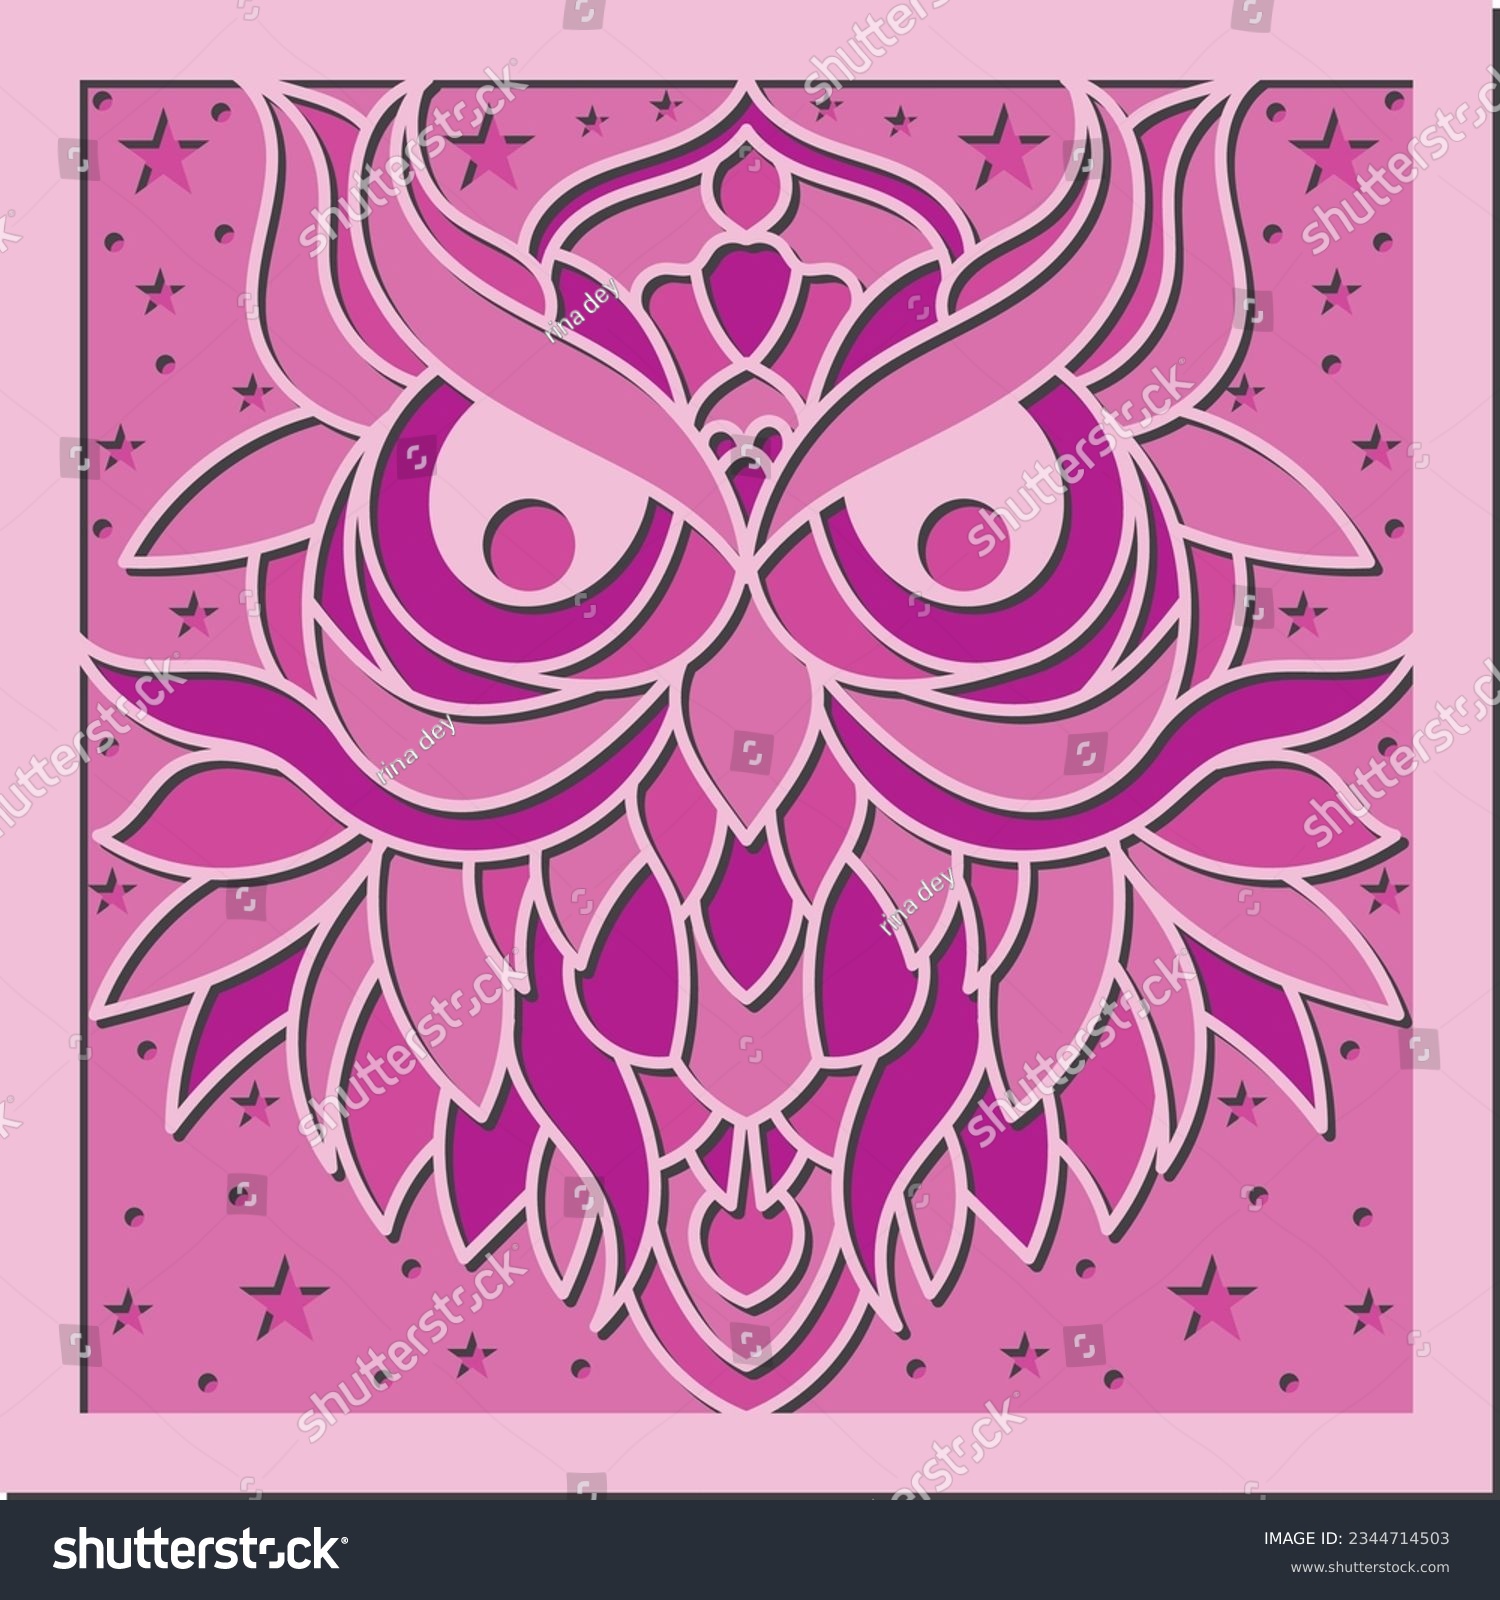 SVG of owl invitaion card laser cut design
3d Owl Shadow box laser cut design
 svg